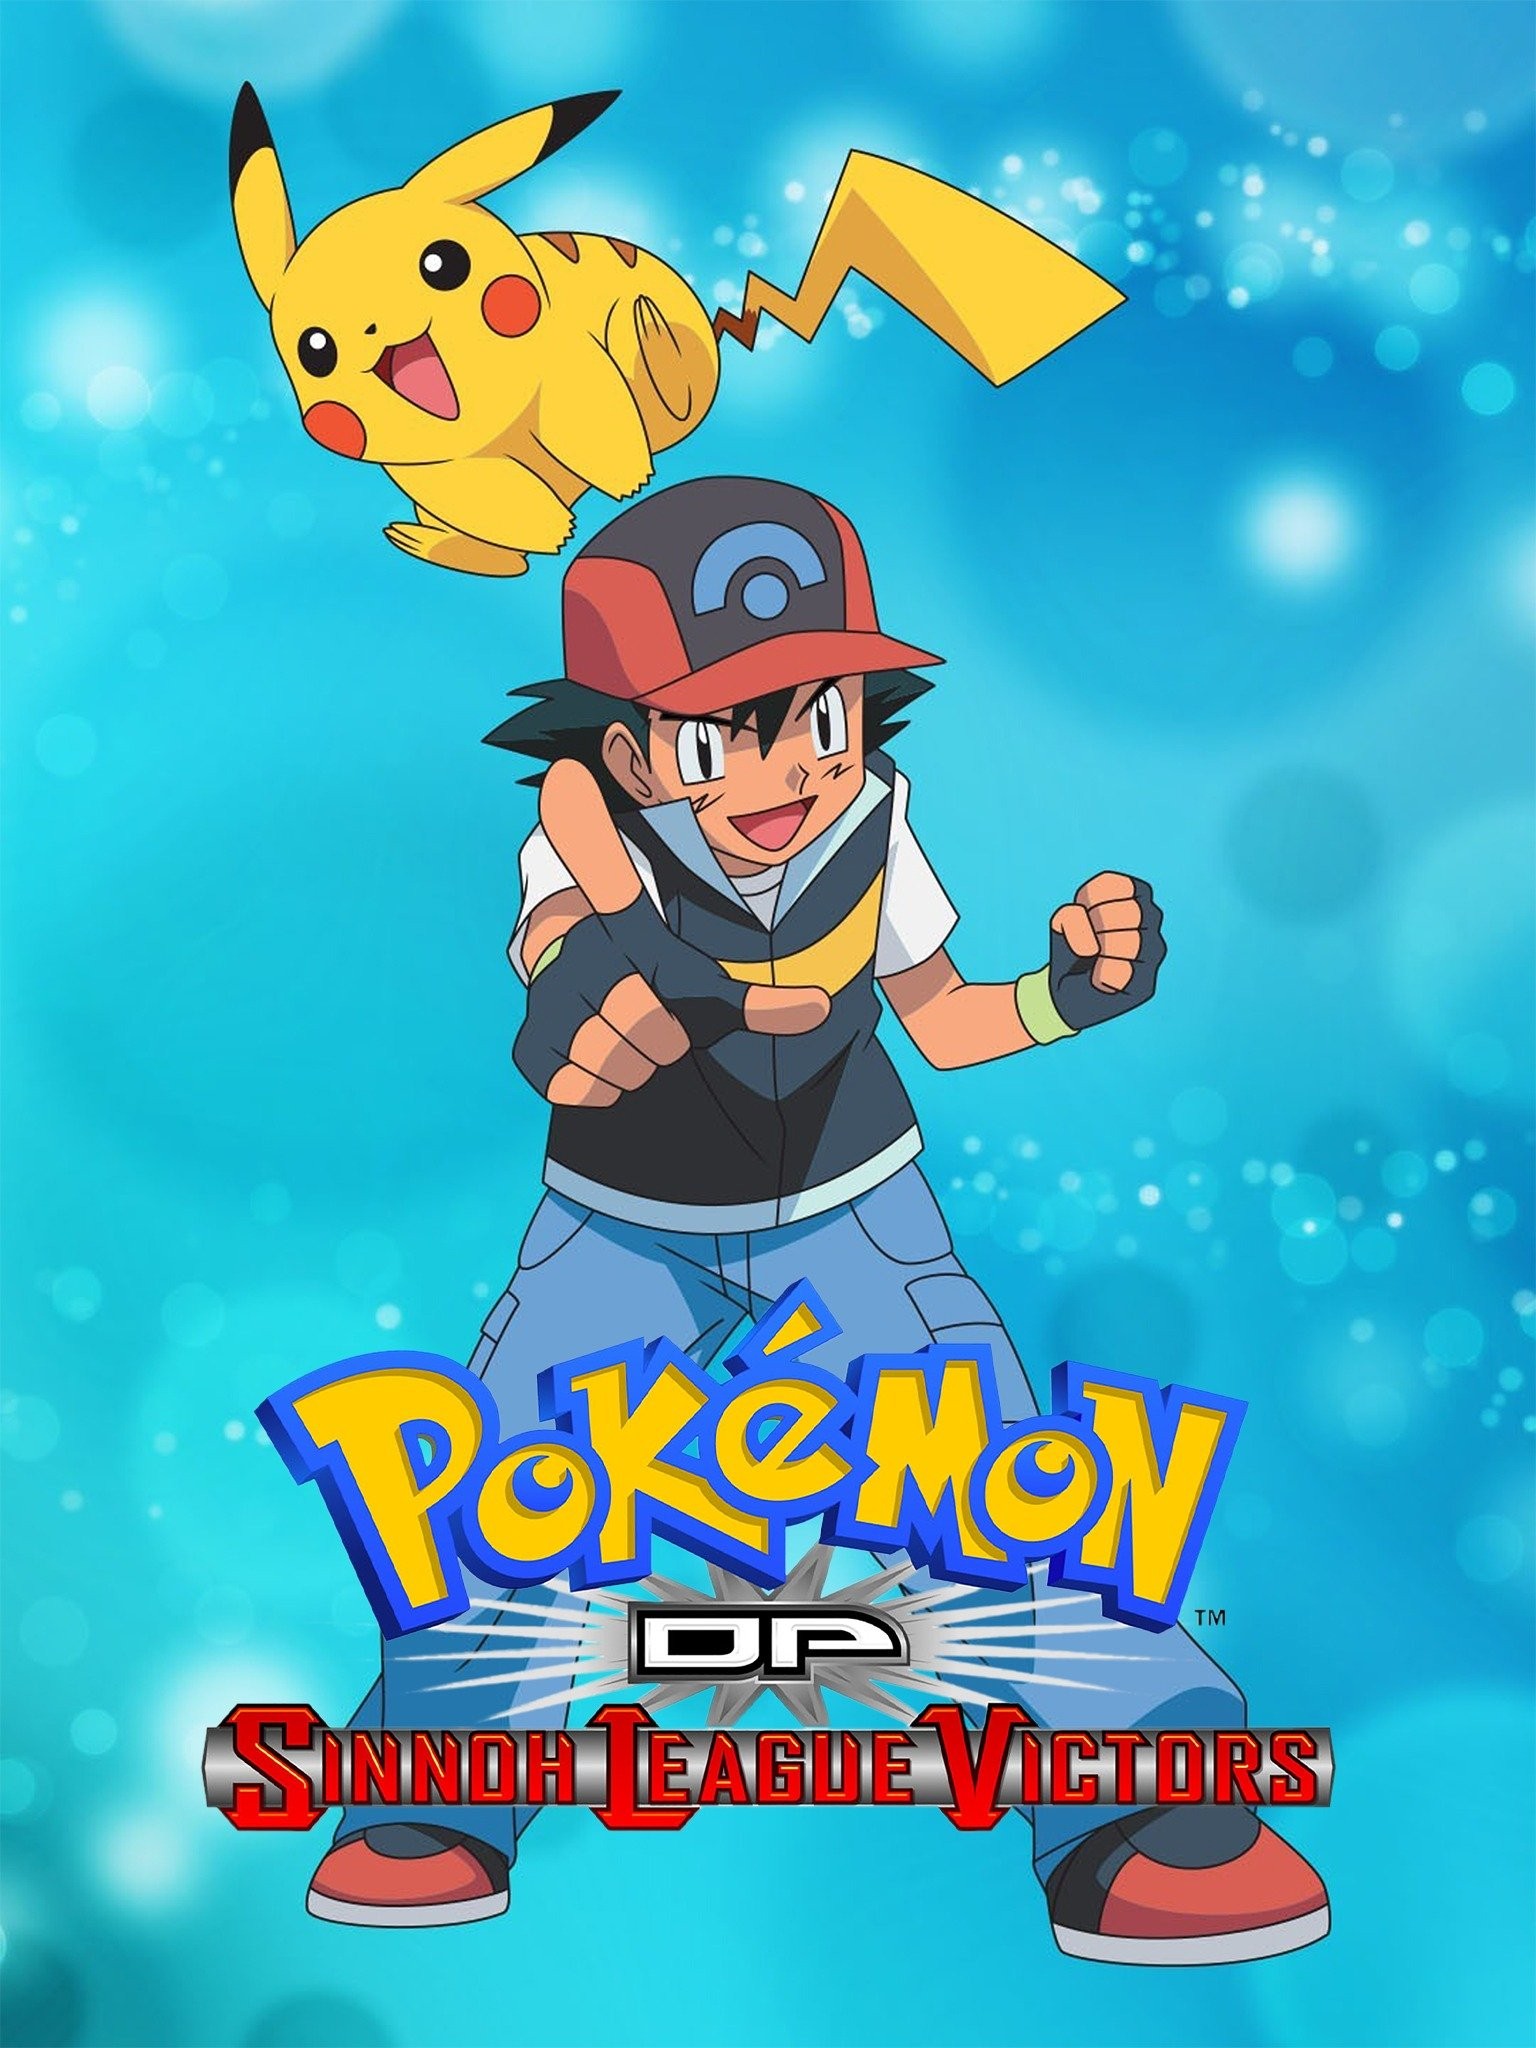 Pokémon the Series: Diamond and Pearl, Episode 19 - Rotten Tomatoes